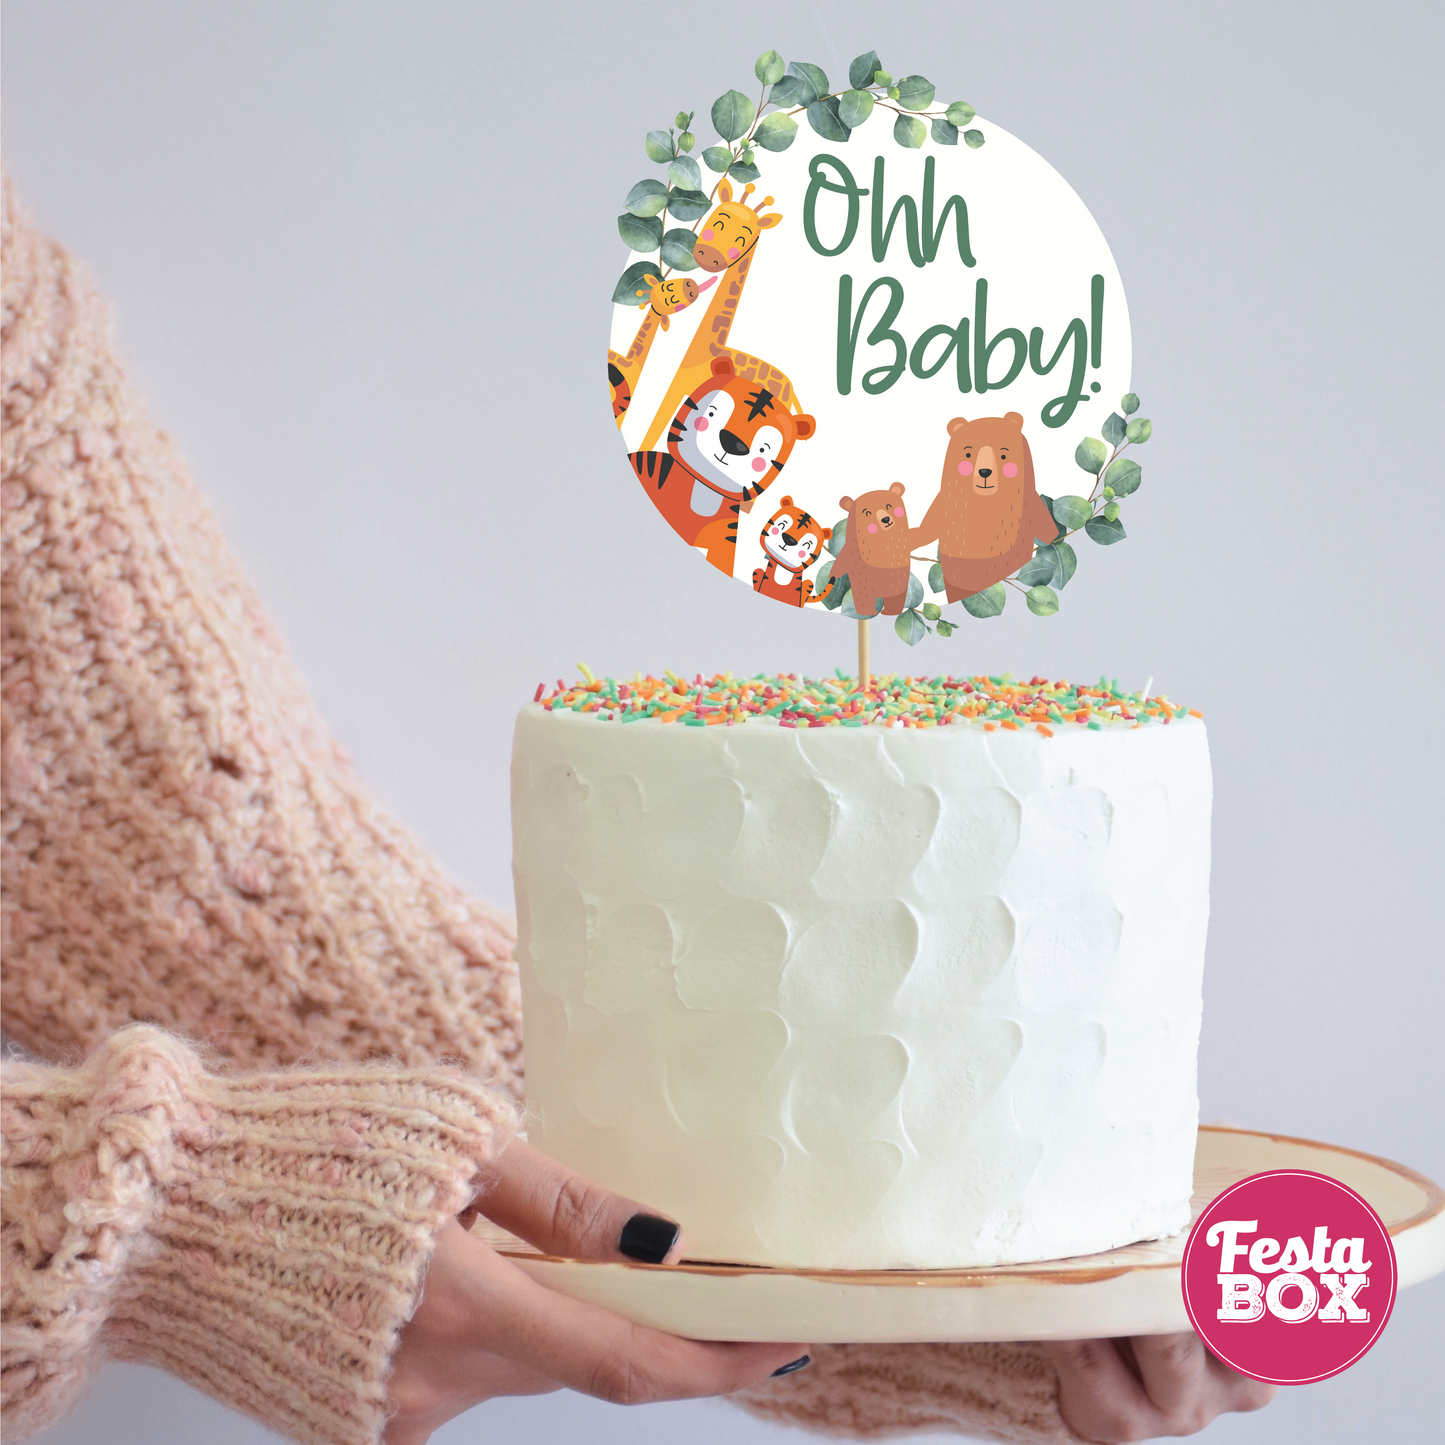 Cake Topper for Baby Shower under the Jungle Safari Theme by Festabox